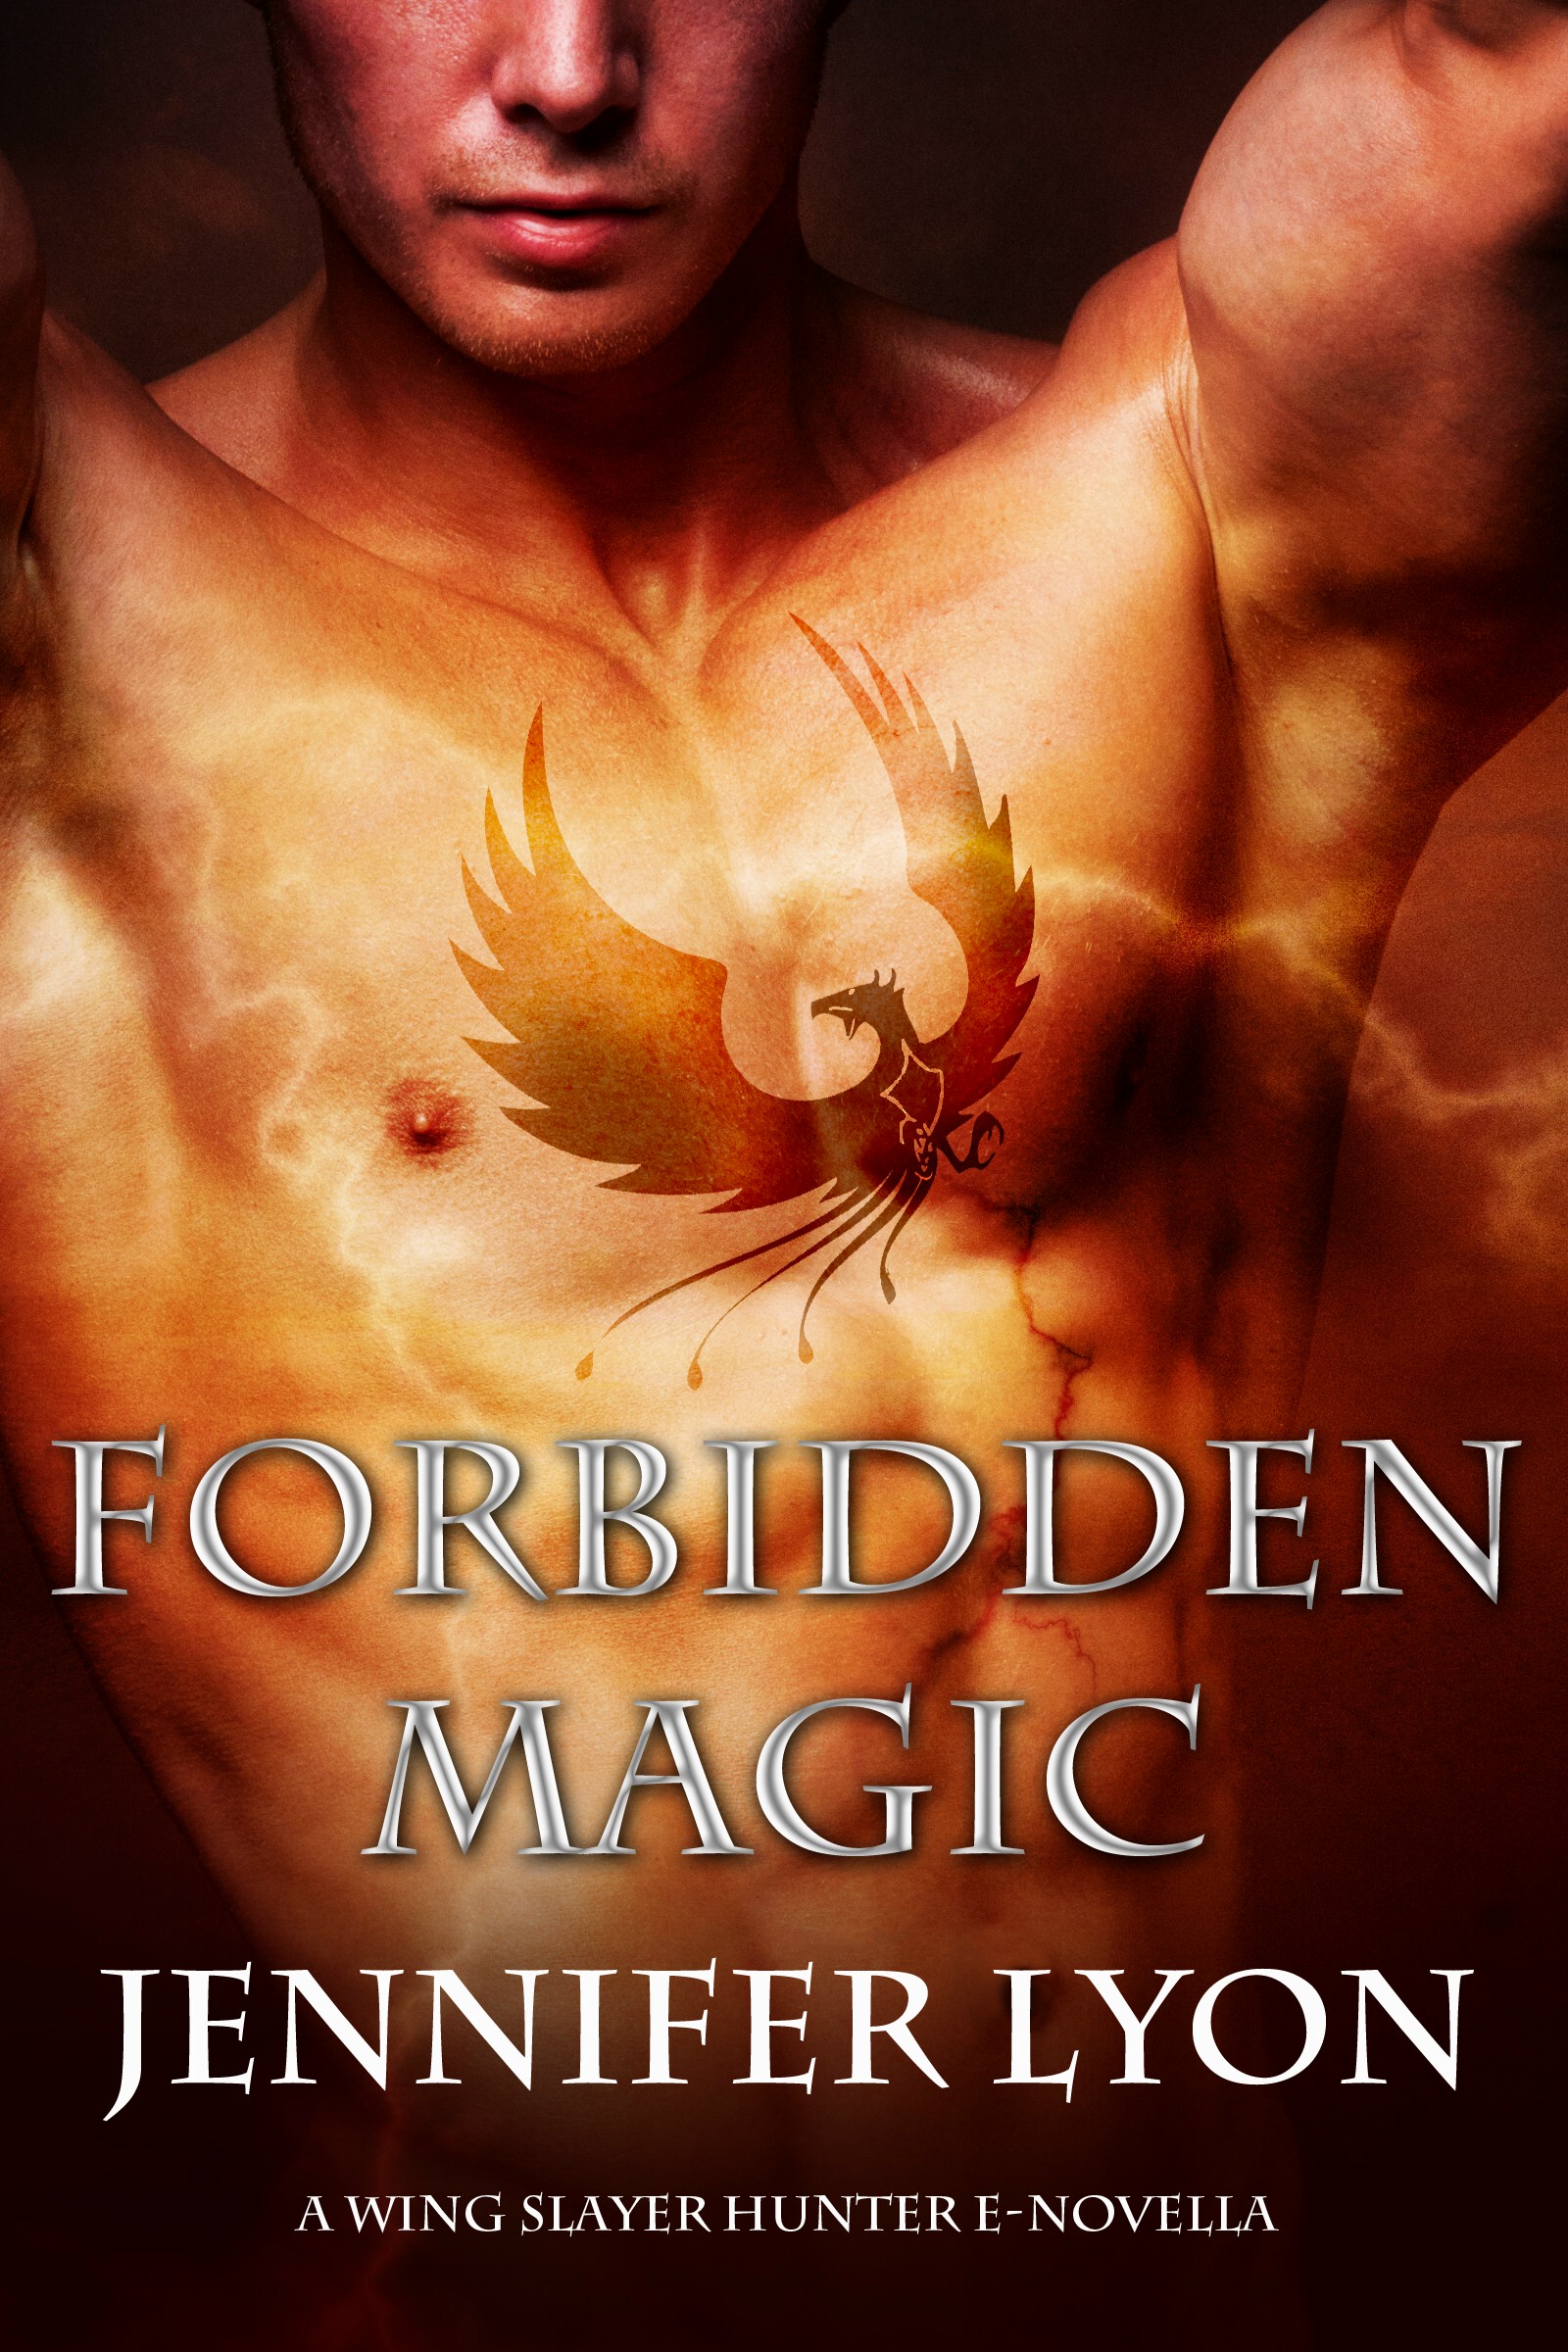 Forbidden magic. Jennifer Lyon книги. Форбиден маджик. Гнев Форбиден Мэджик.